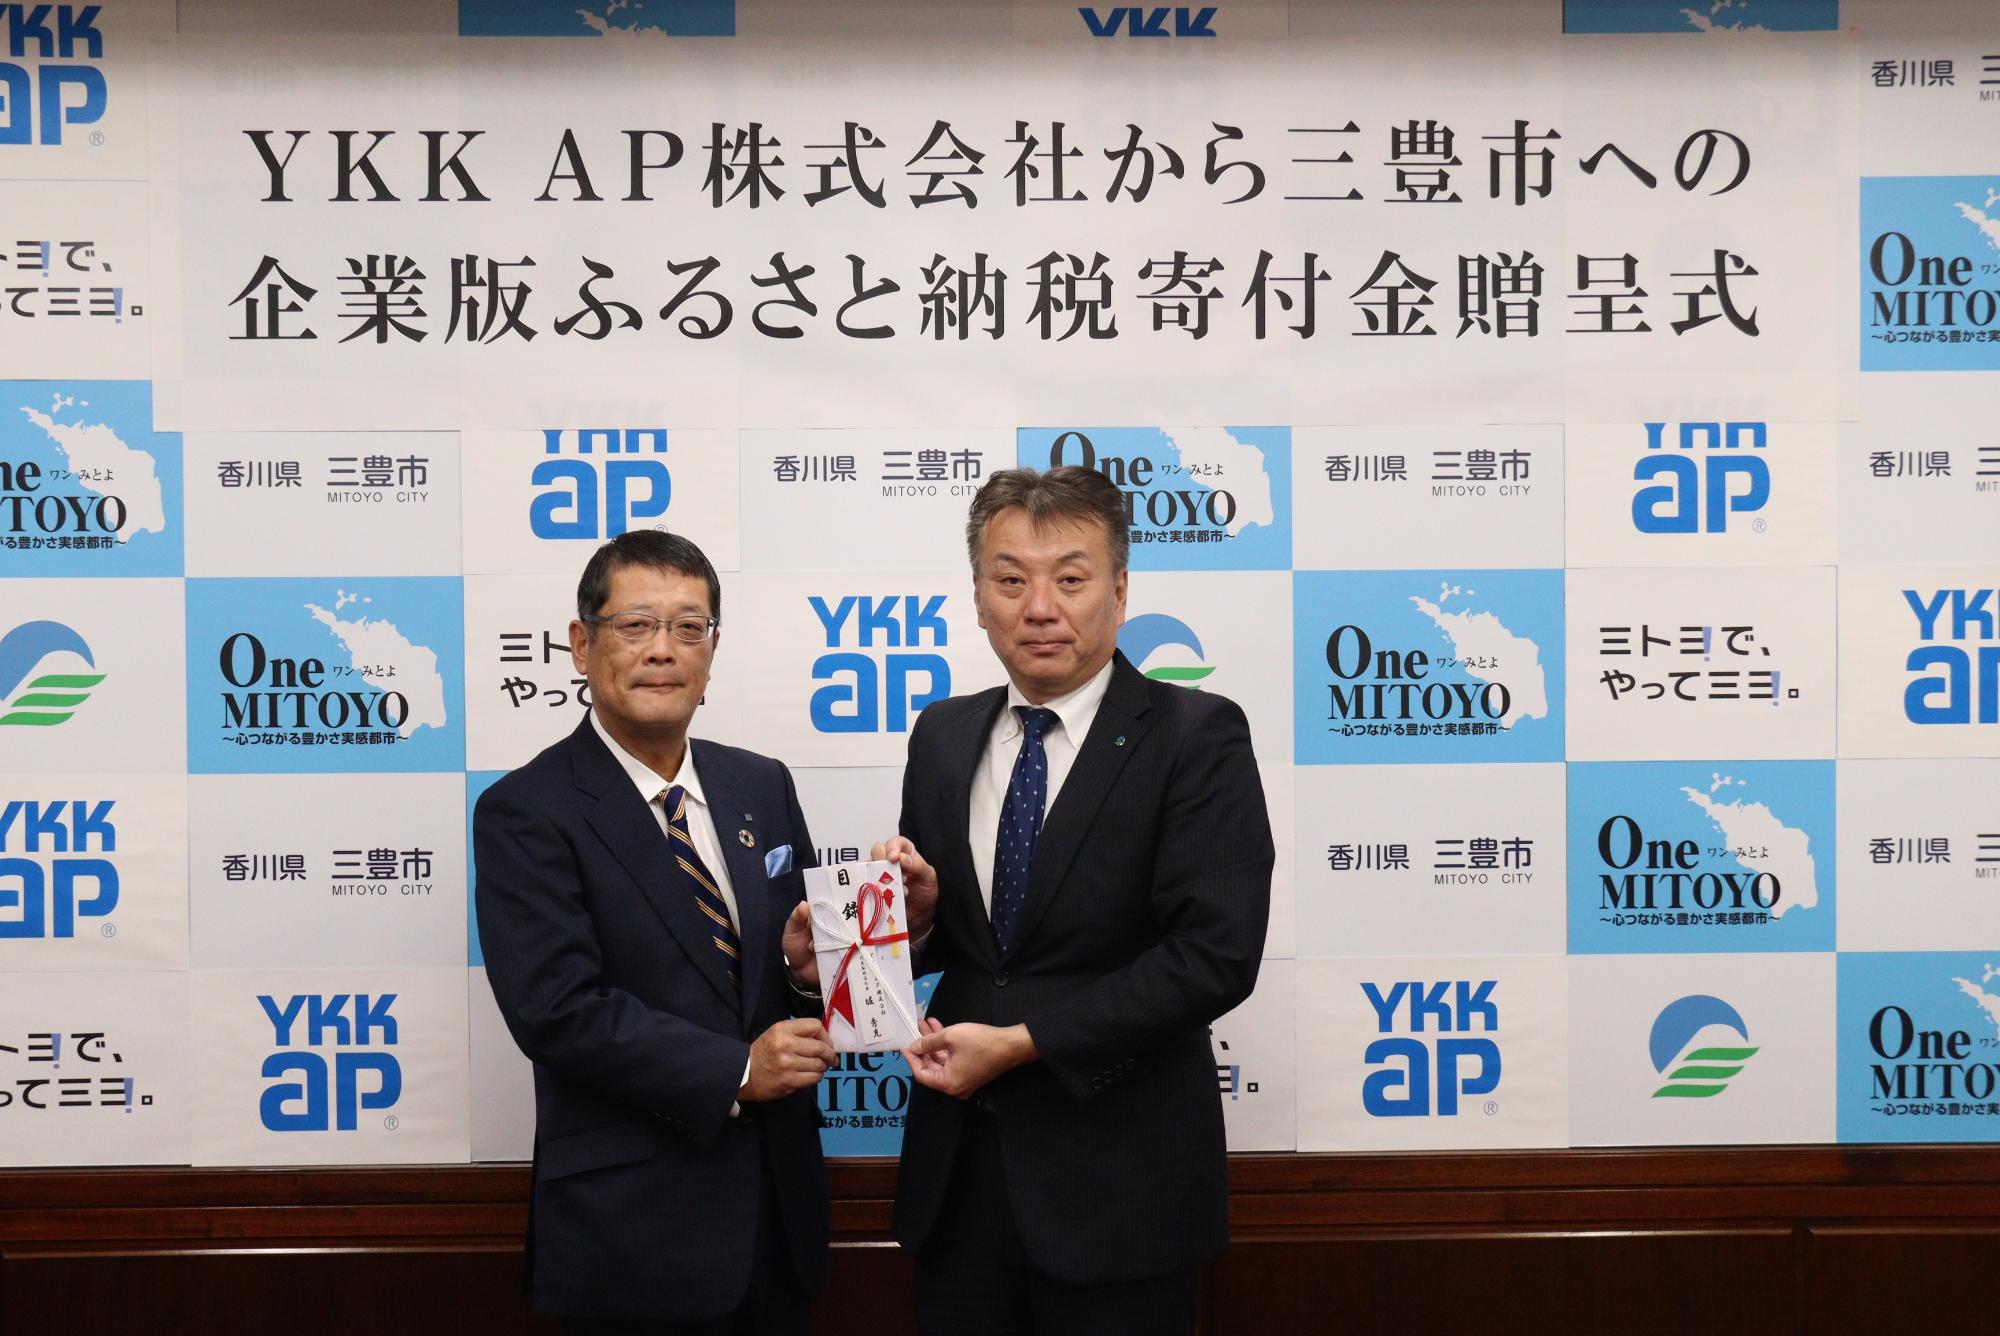 YKK AP株式会社からの寄付金贈呈式